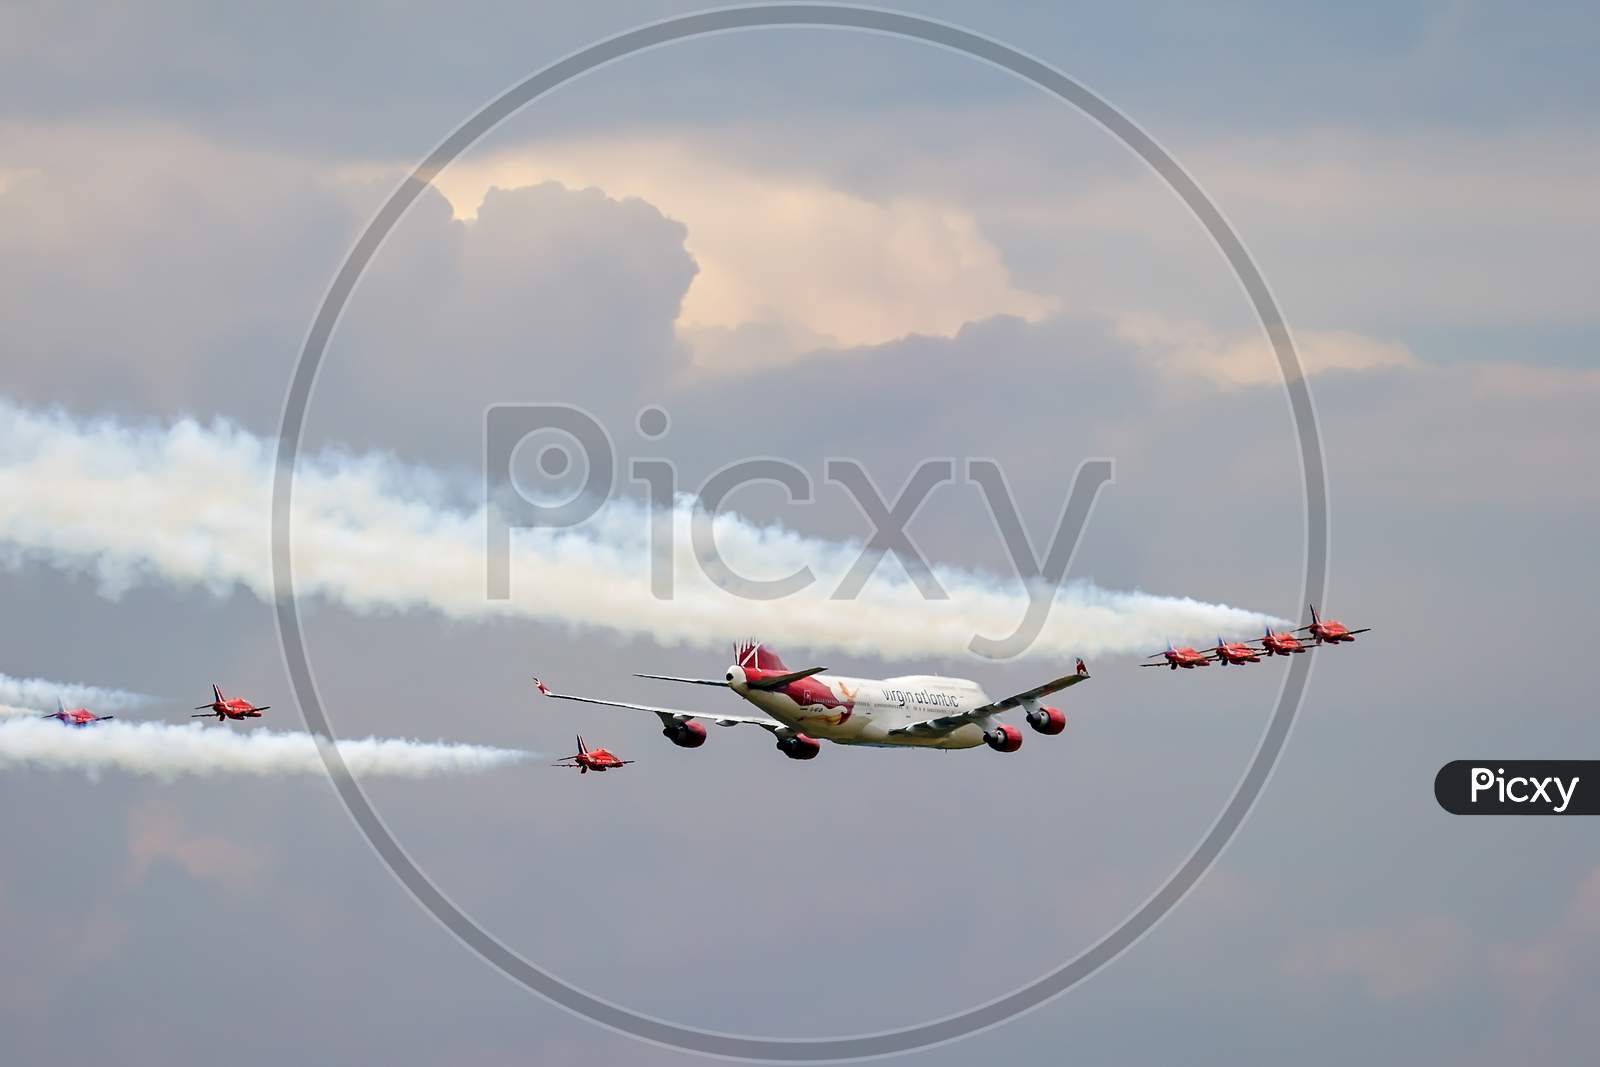 Virgin Atlantic Boeing 747-400 And Red Arrows Aerial Display At Biggin Hill Airshow